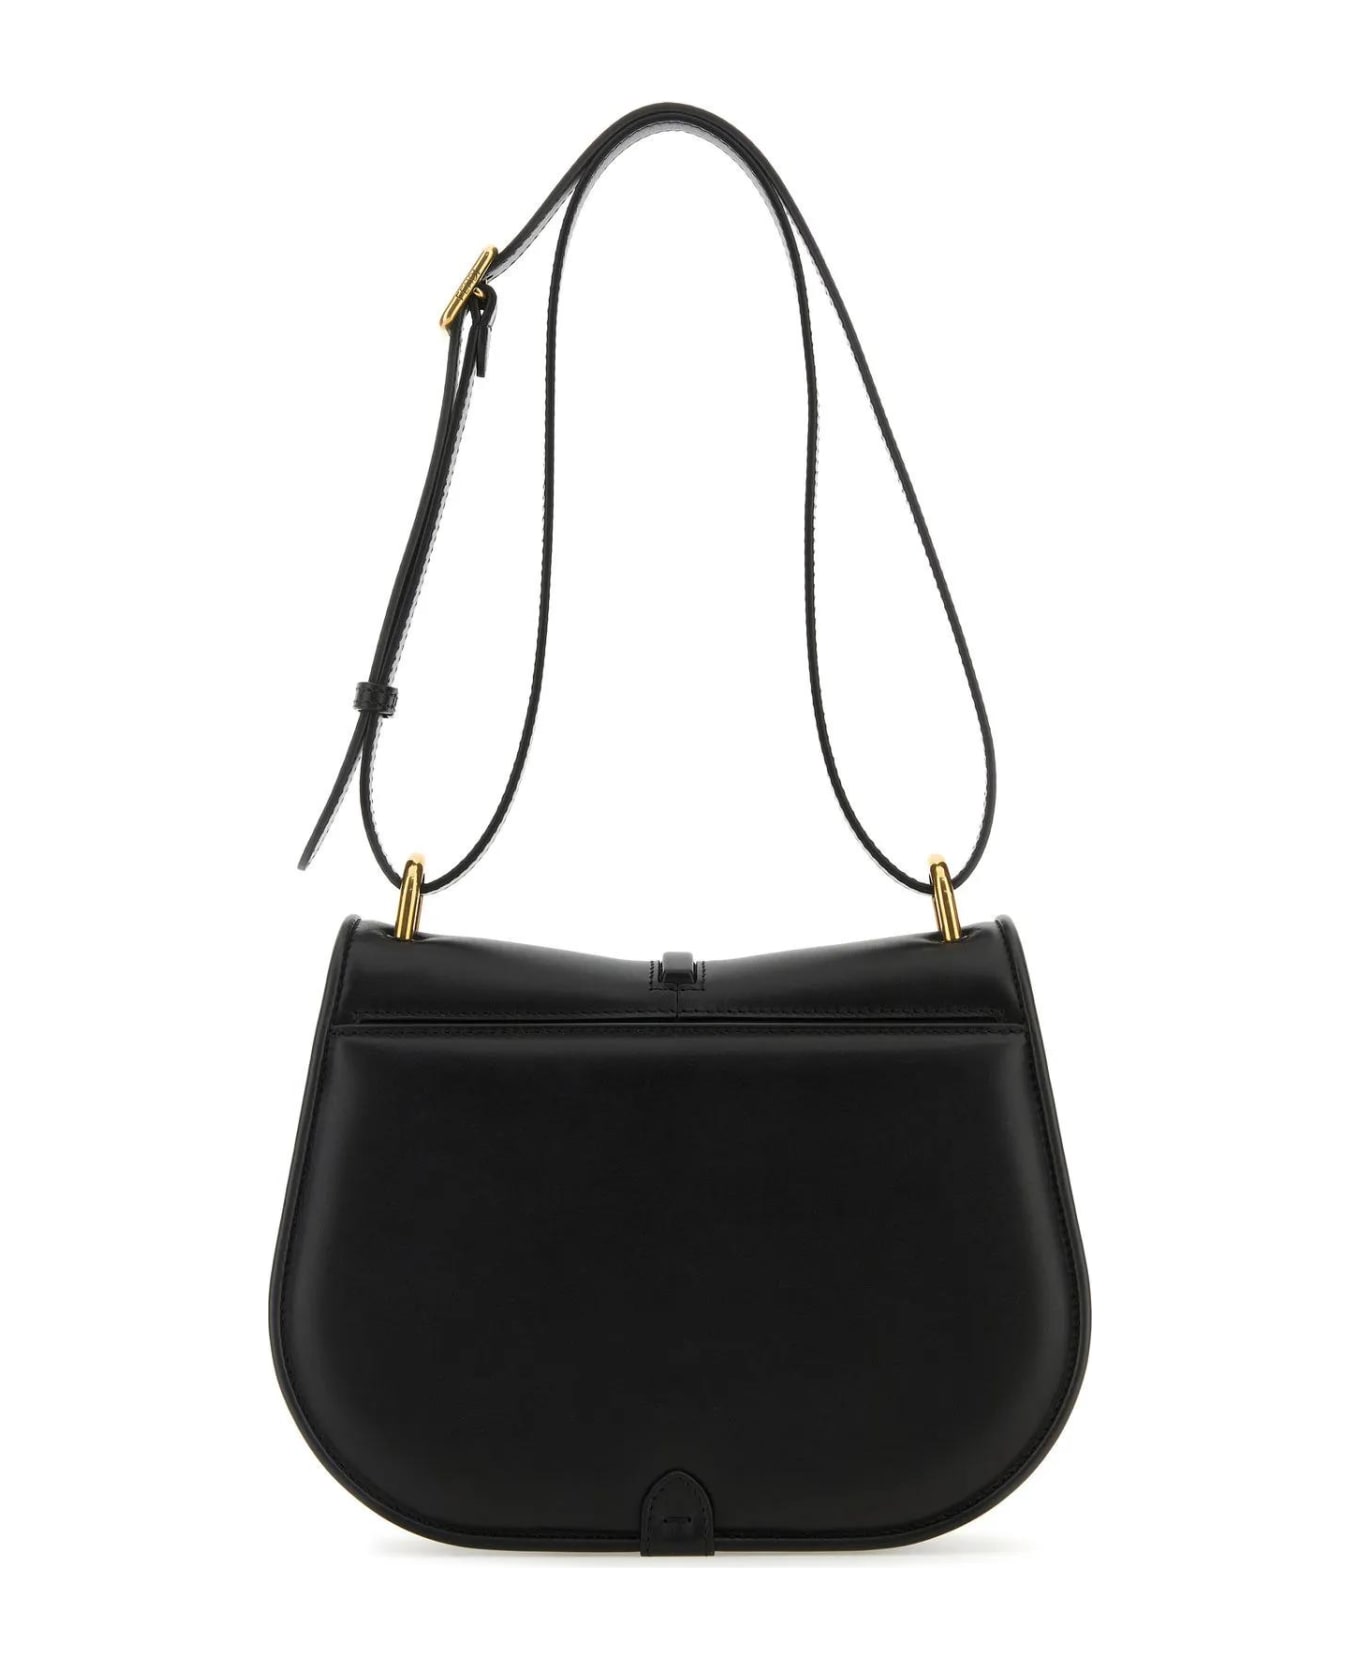 Fendi Black Leather C'mon Medium Shoulder Bag - Black